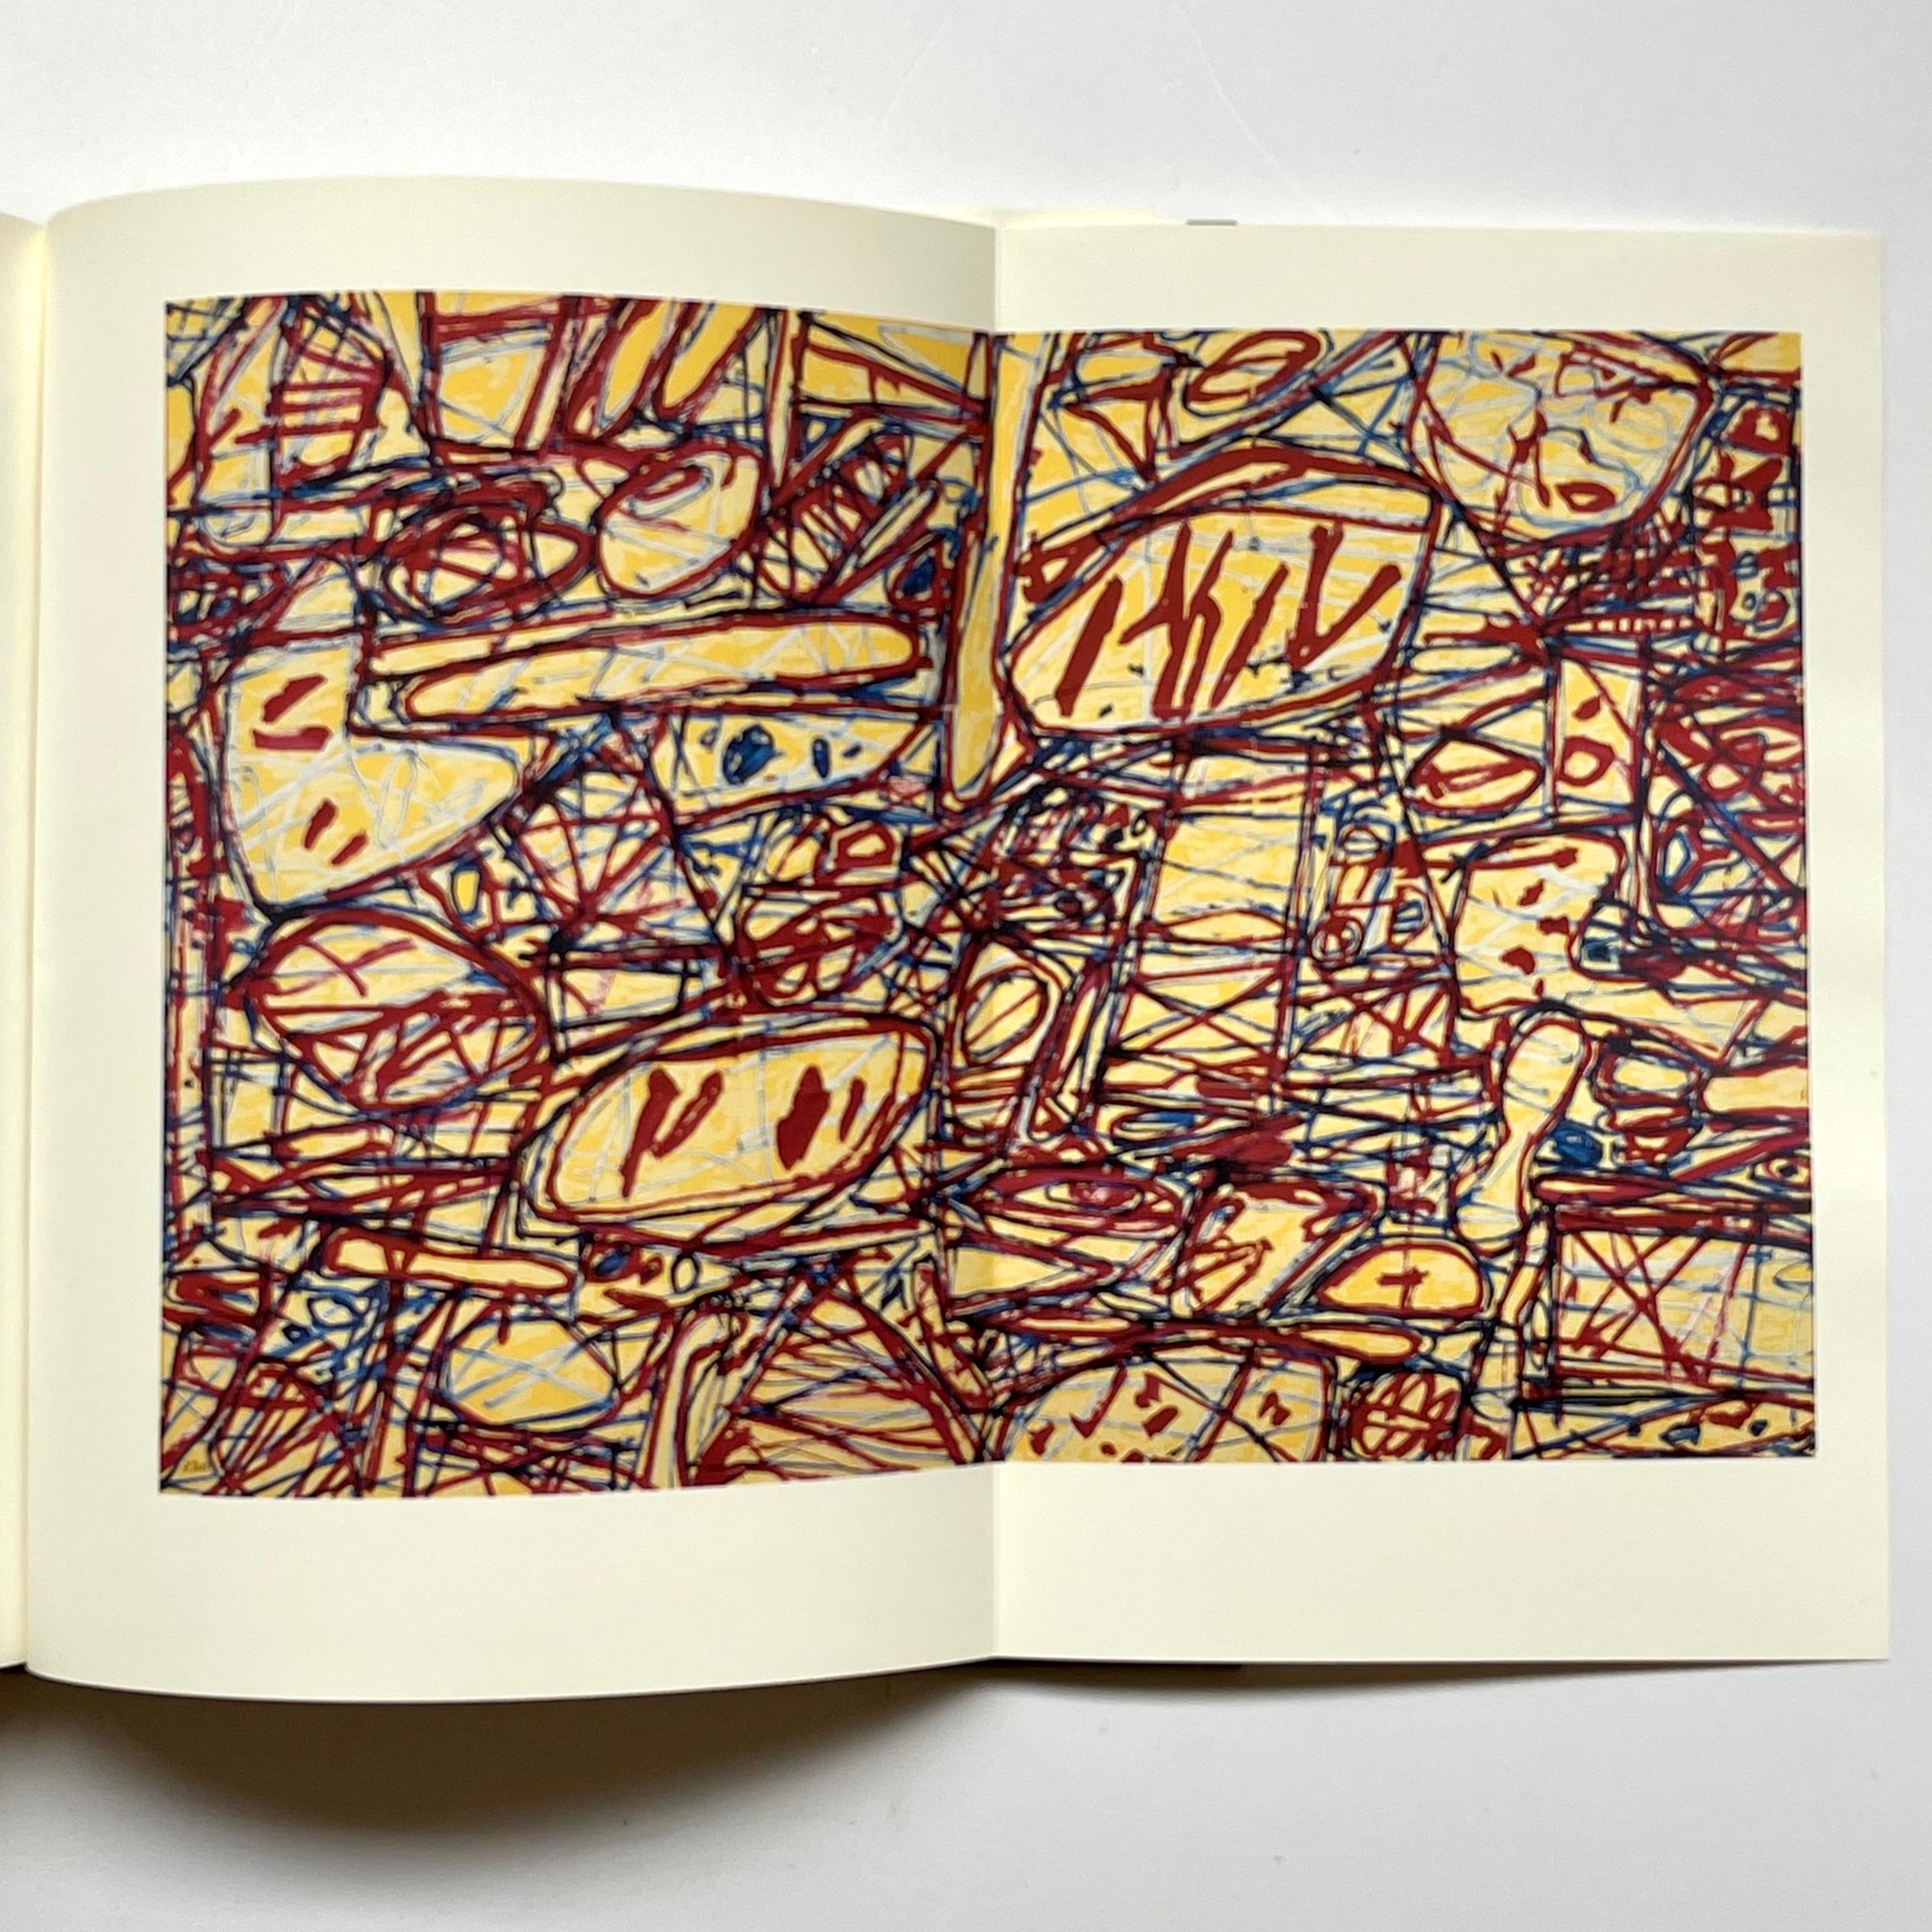 Paper De Kooning / Dubuffet, the Late Works, Peter Schjeldahl, 1st Edition, Pace, 1993